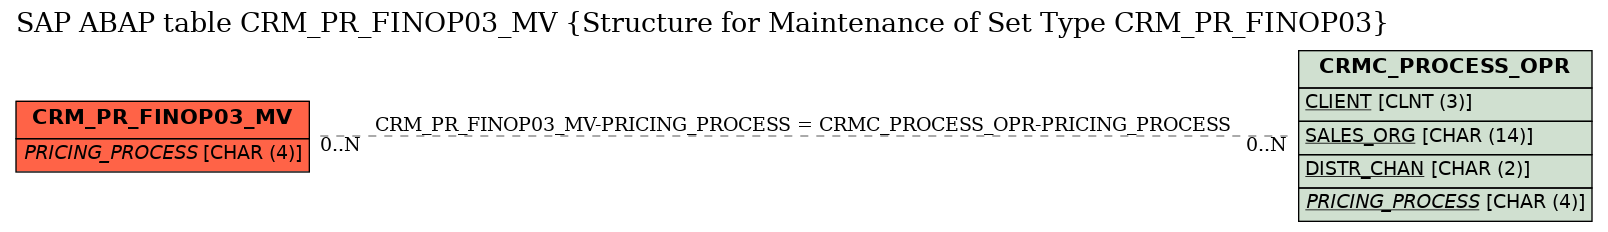 E-R Diagram for table CRM_PR_FINOP03_MV (Structure for Maintenance of Set Type CRM_PR_FINOP03)